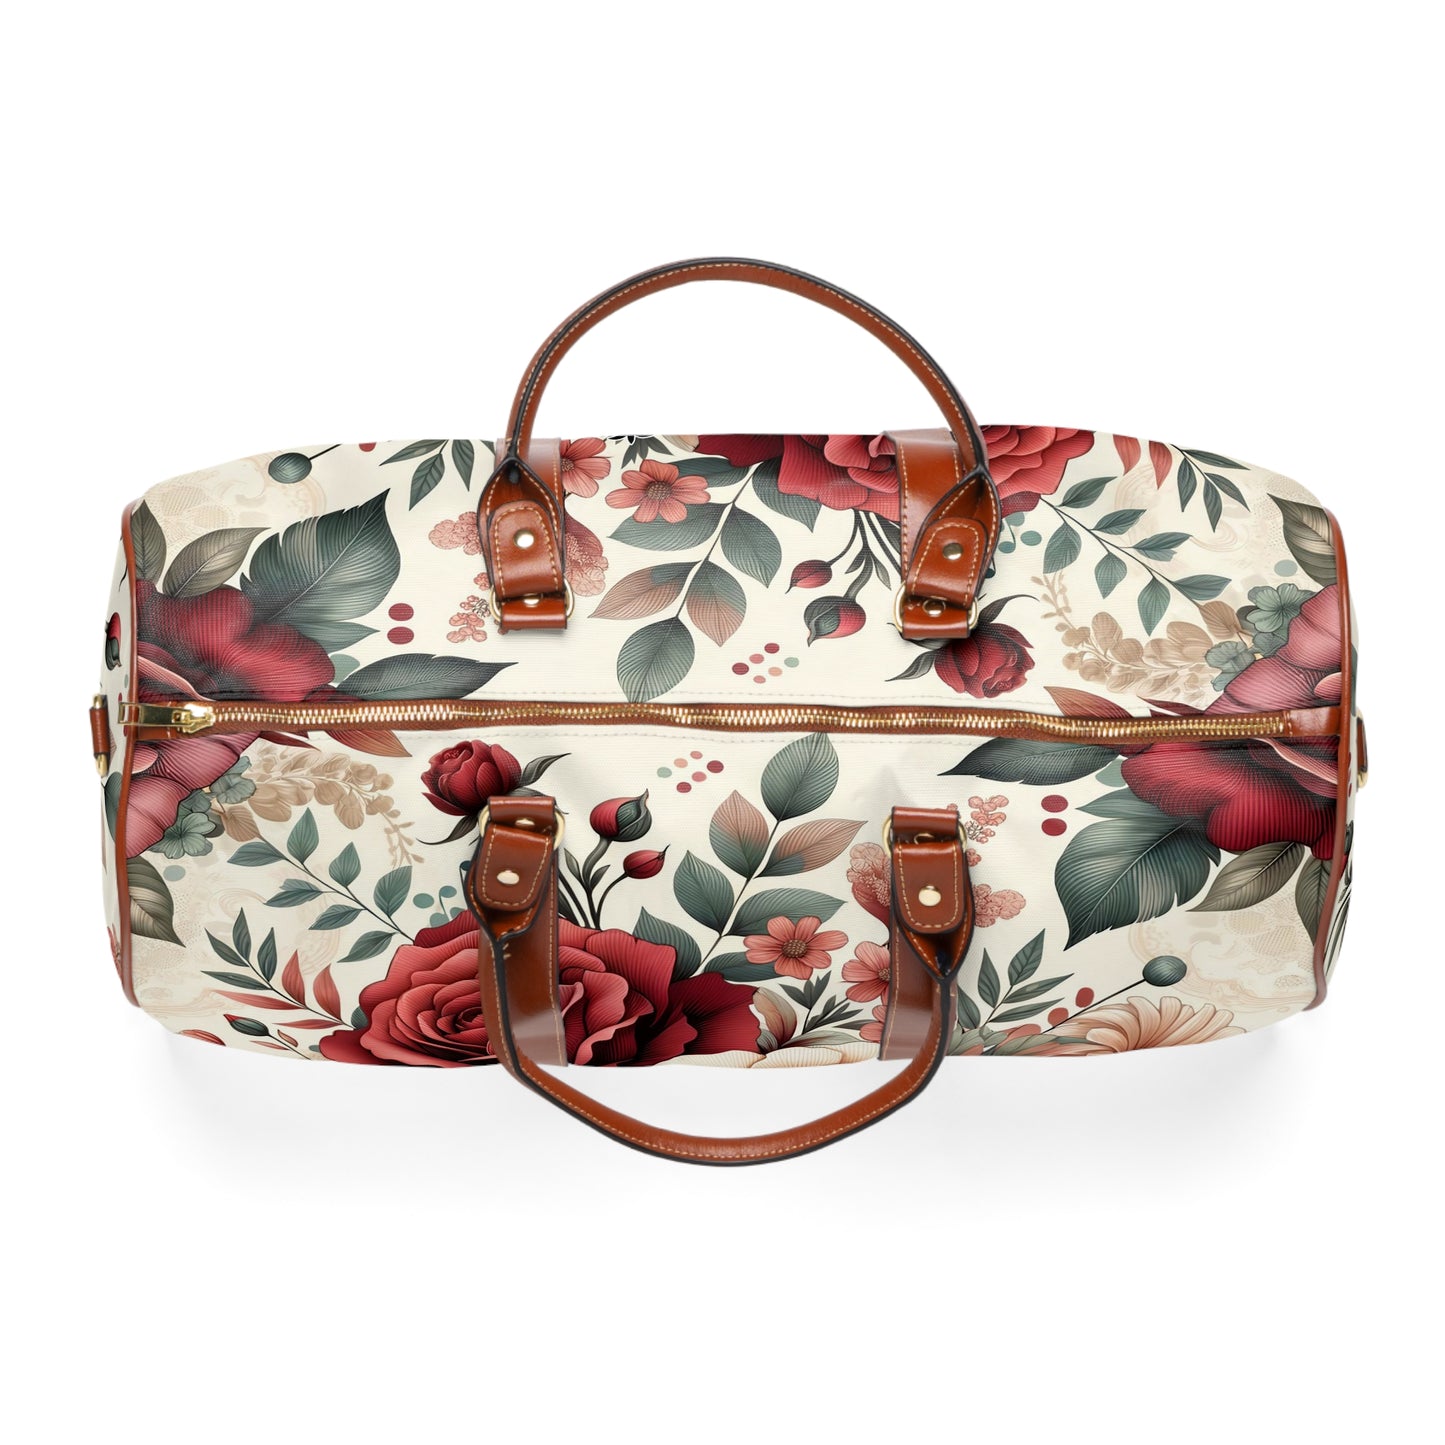 Luminesque Red - Waterproof Travel Bag